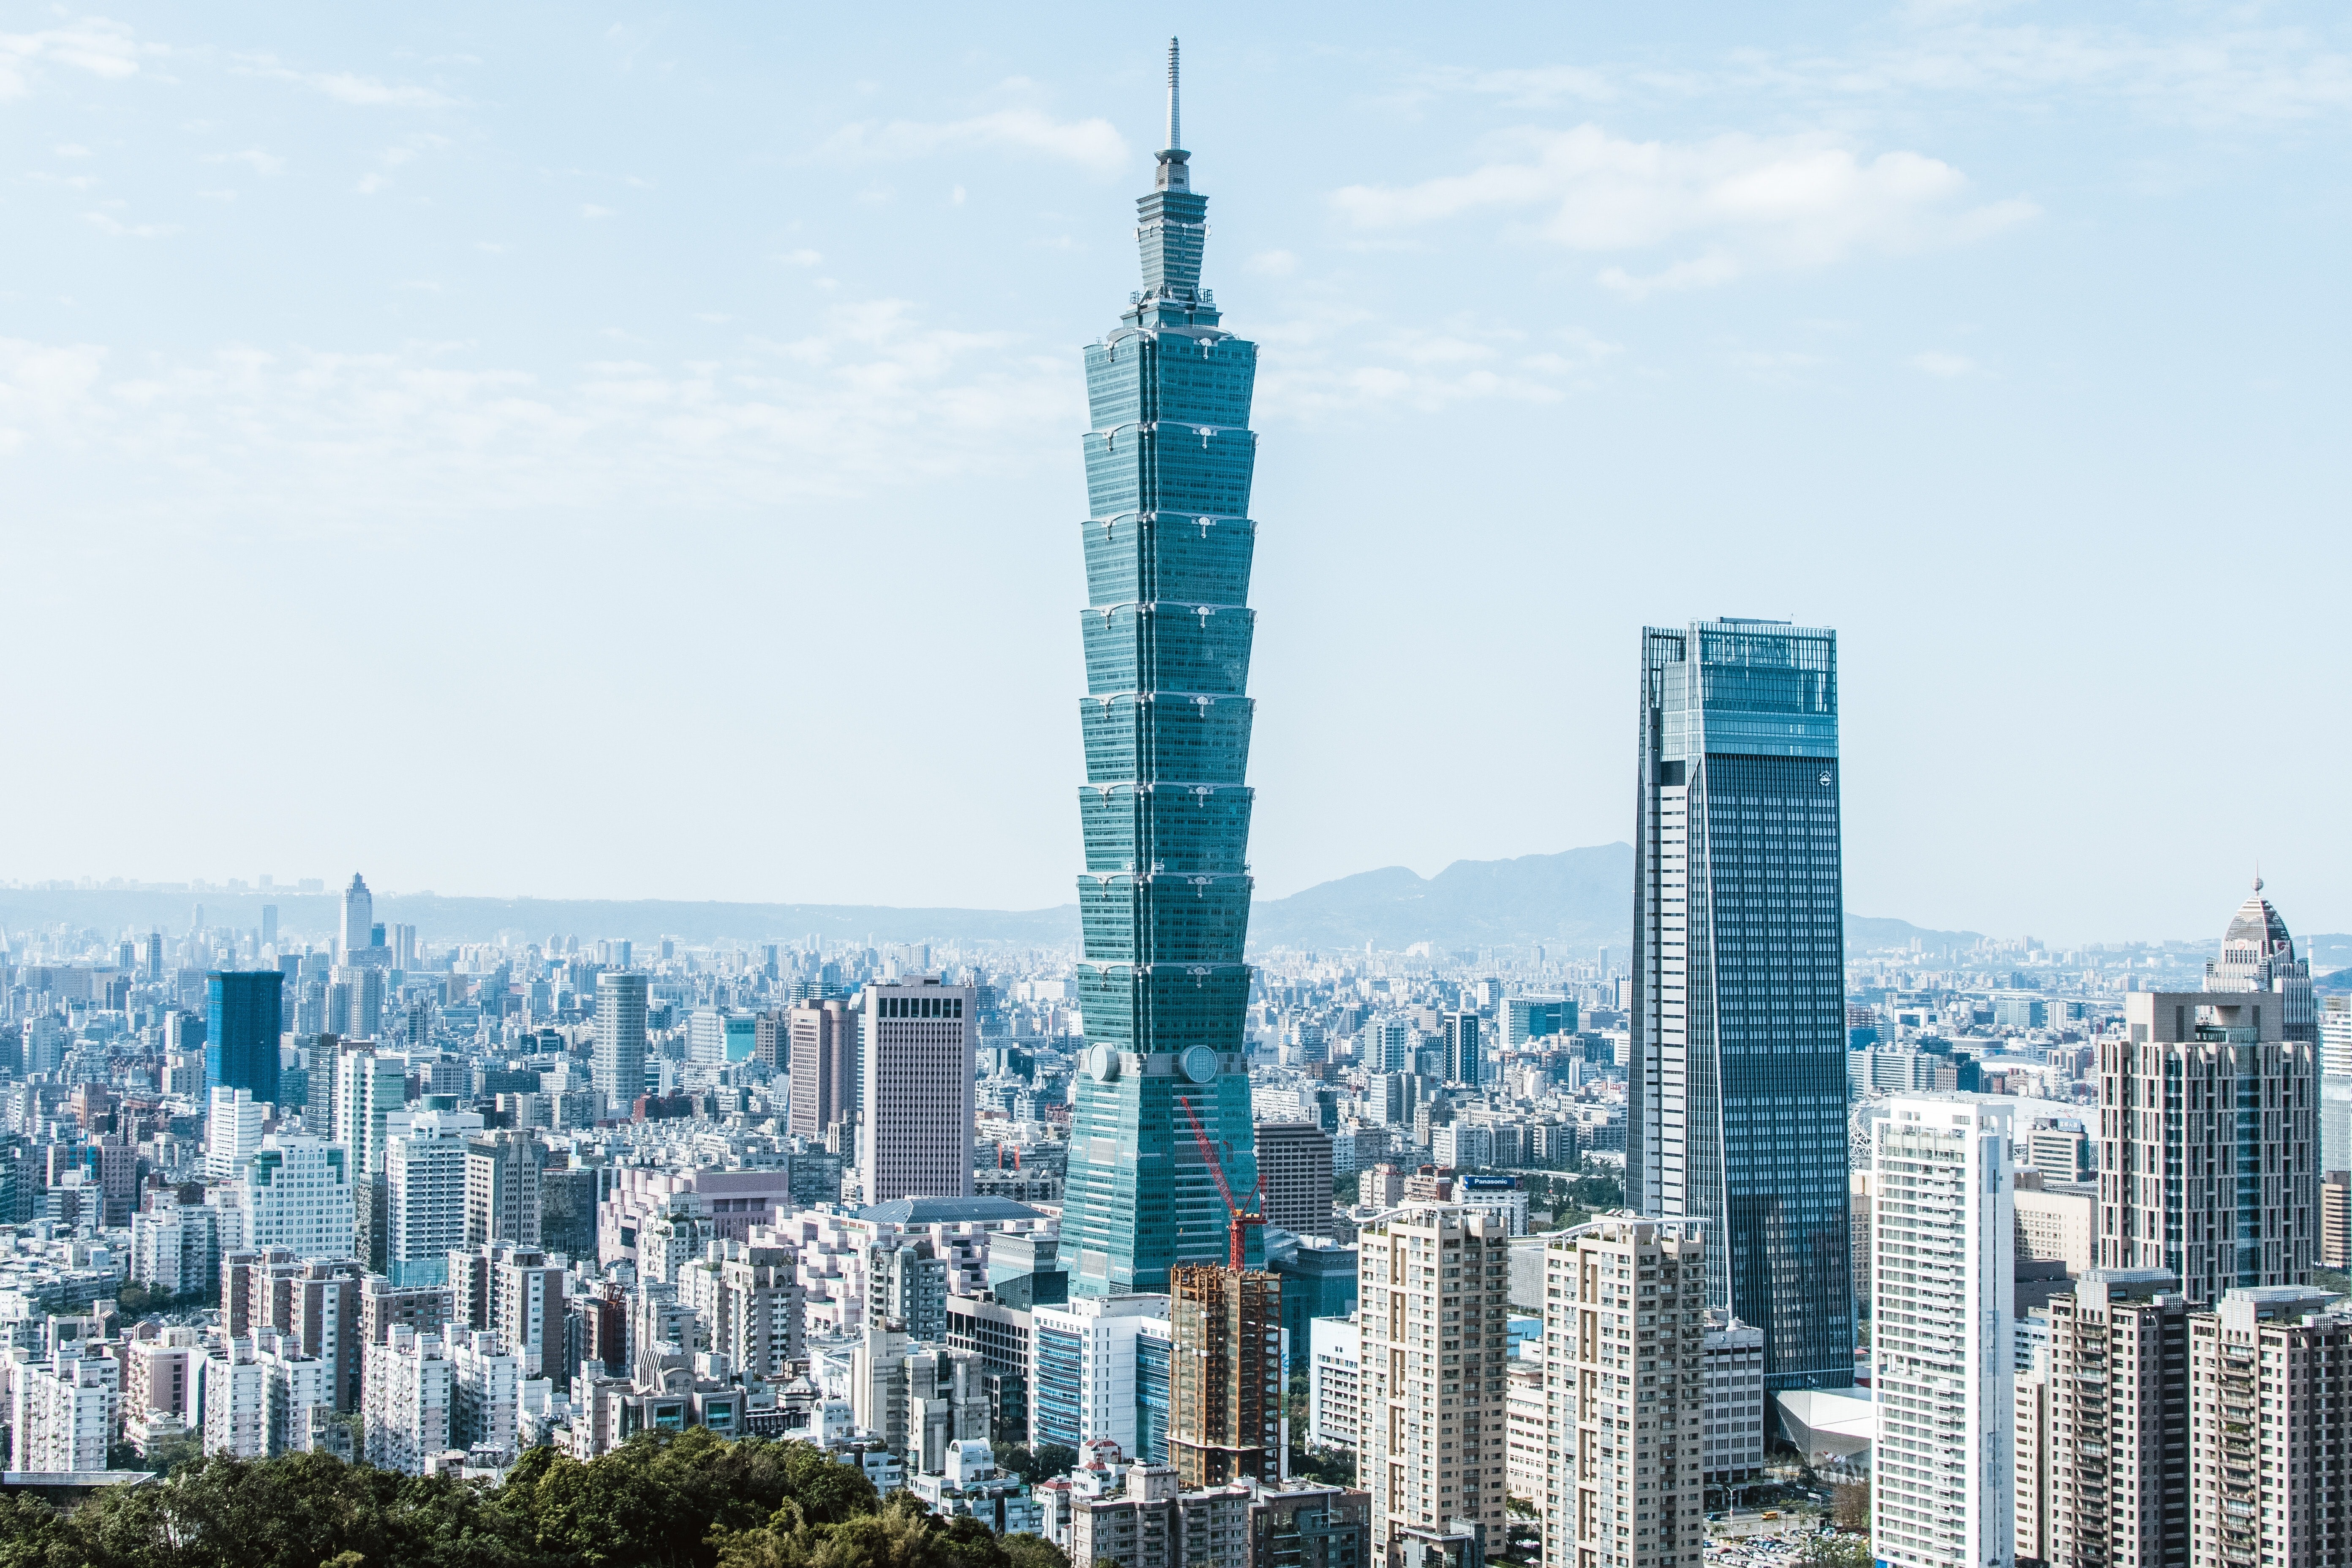 Taipei 101, landmark attraction of Taiwan’s capital. Photo: Remi Yuan/Unsplash